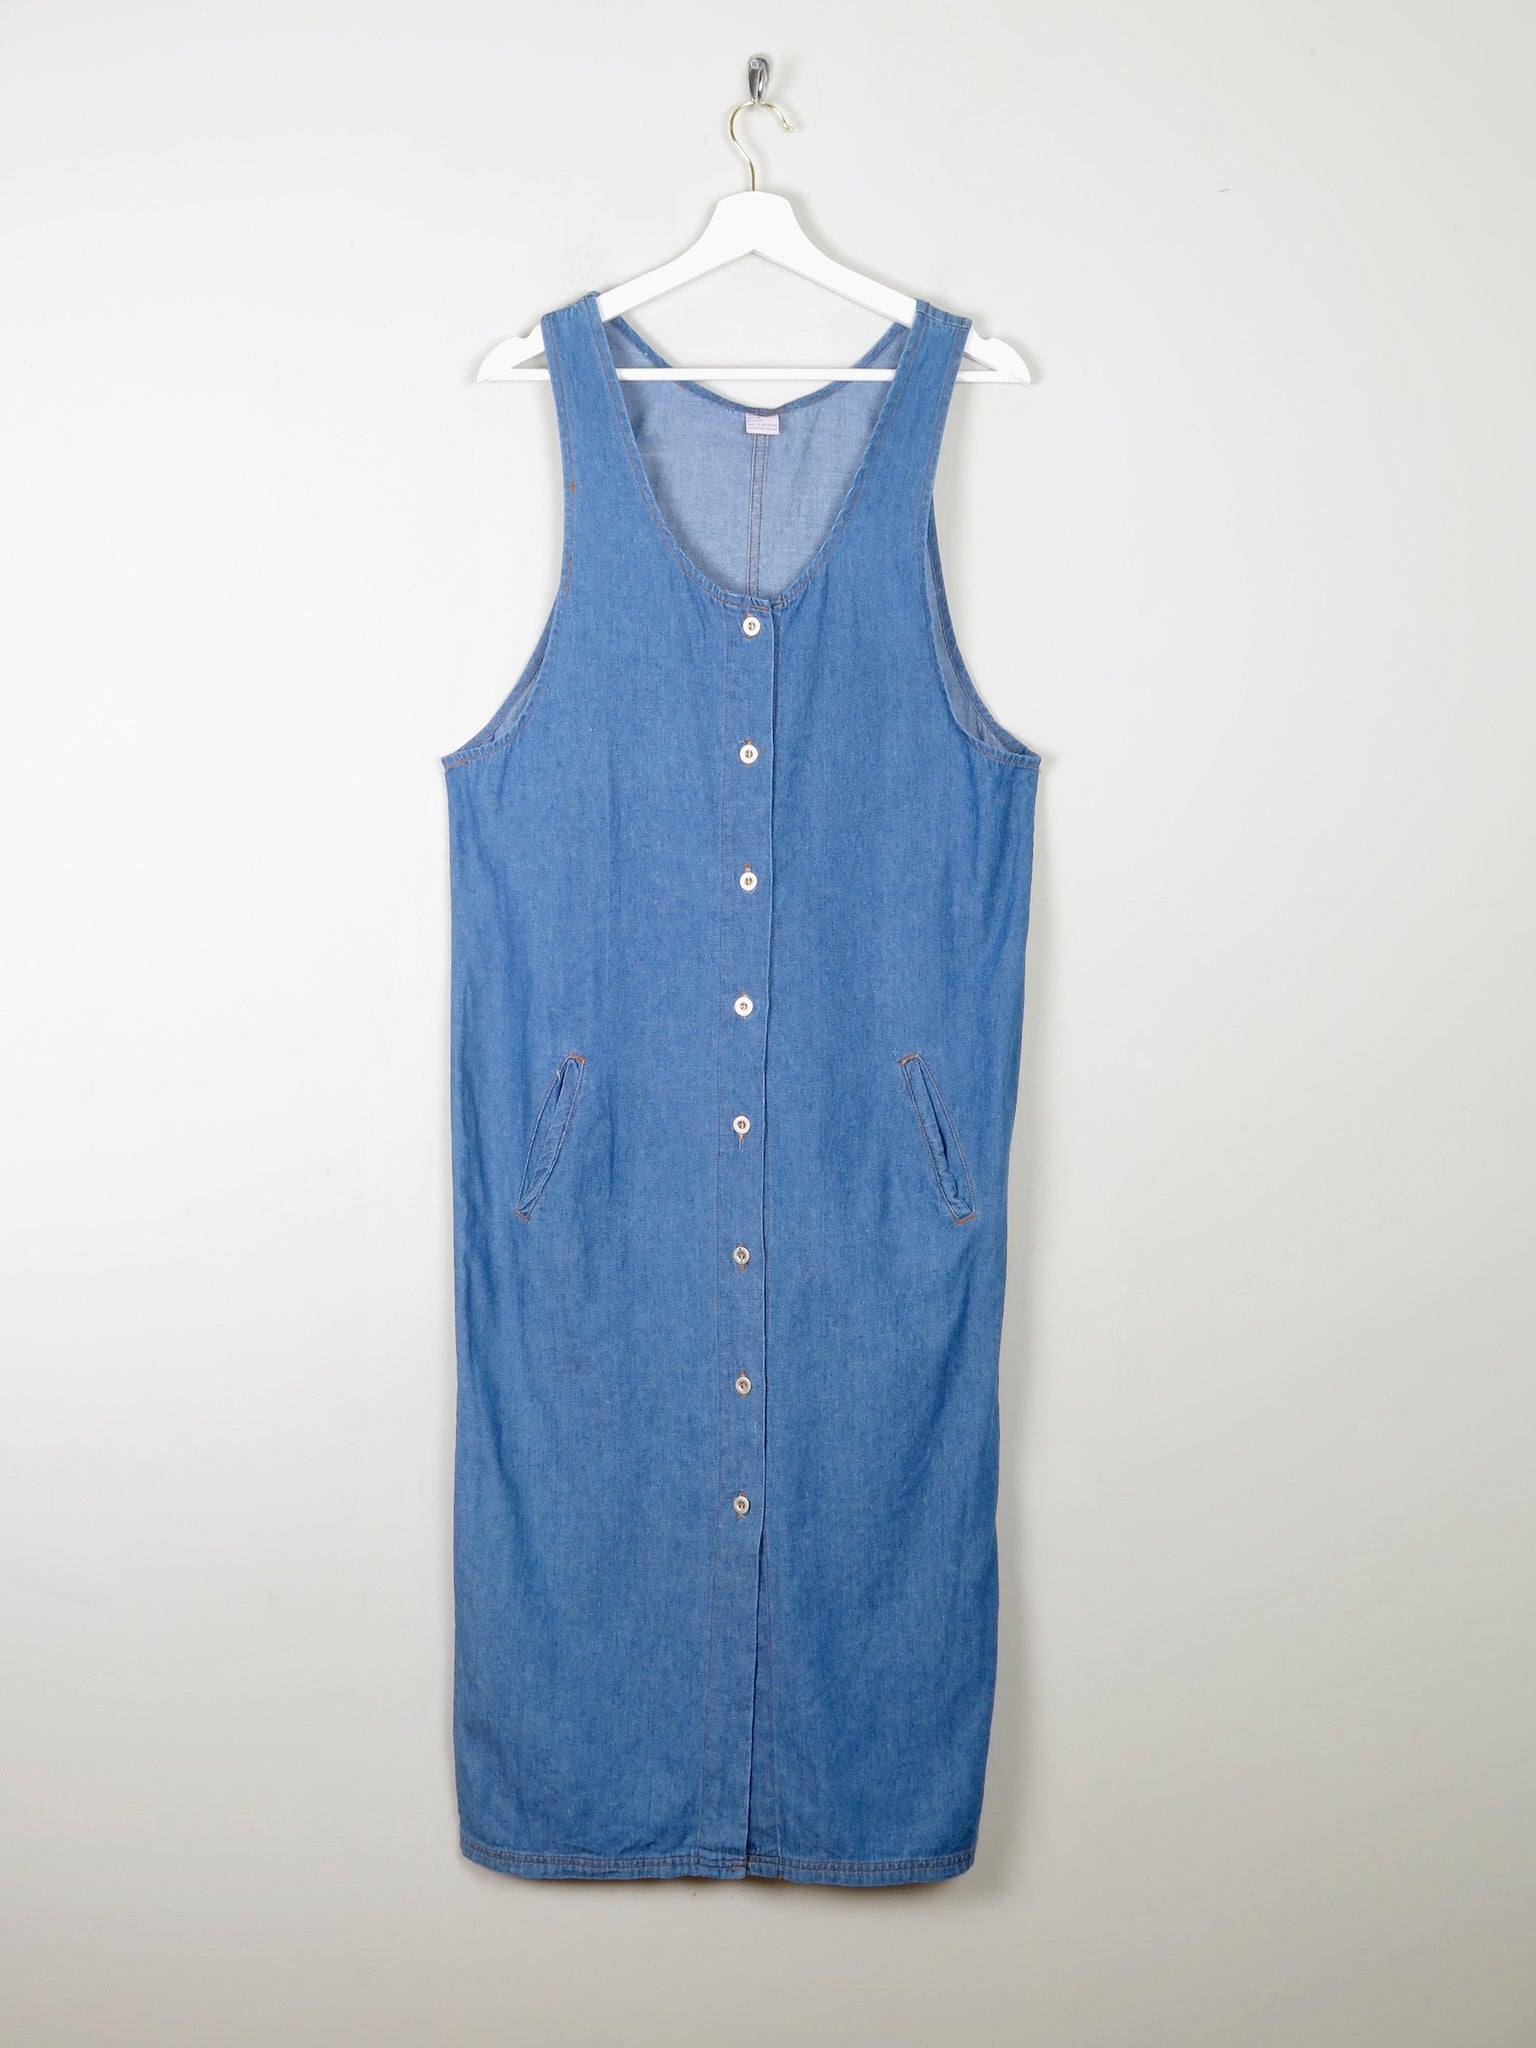 Blue Vintage Denim Dungaree Style Dress S/M - The Harlequin